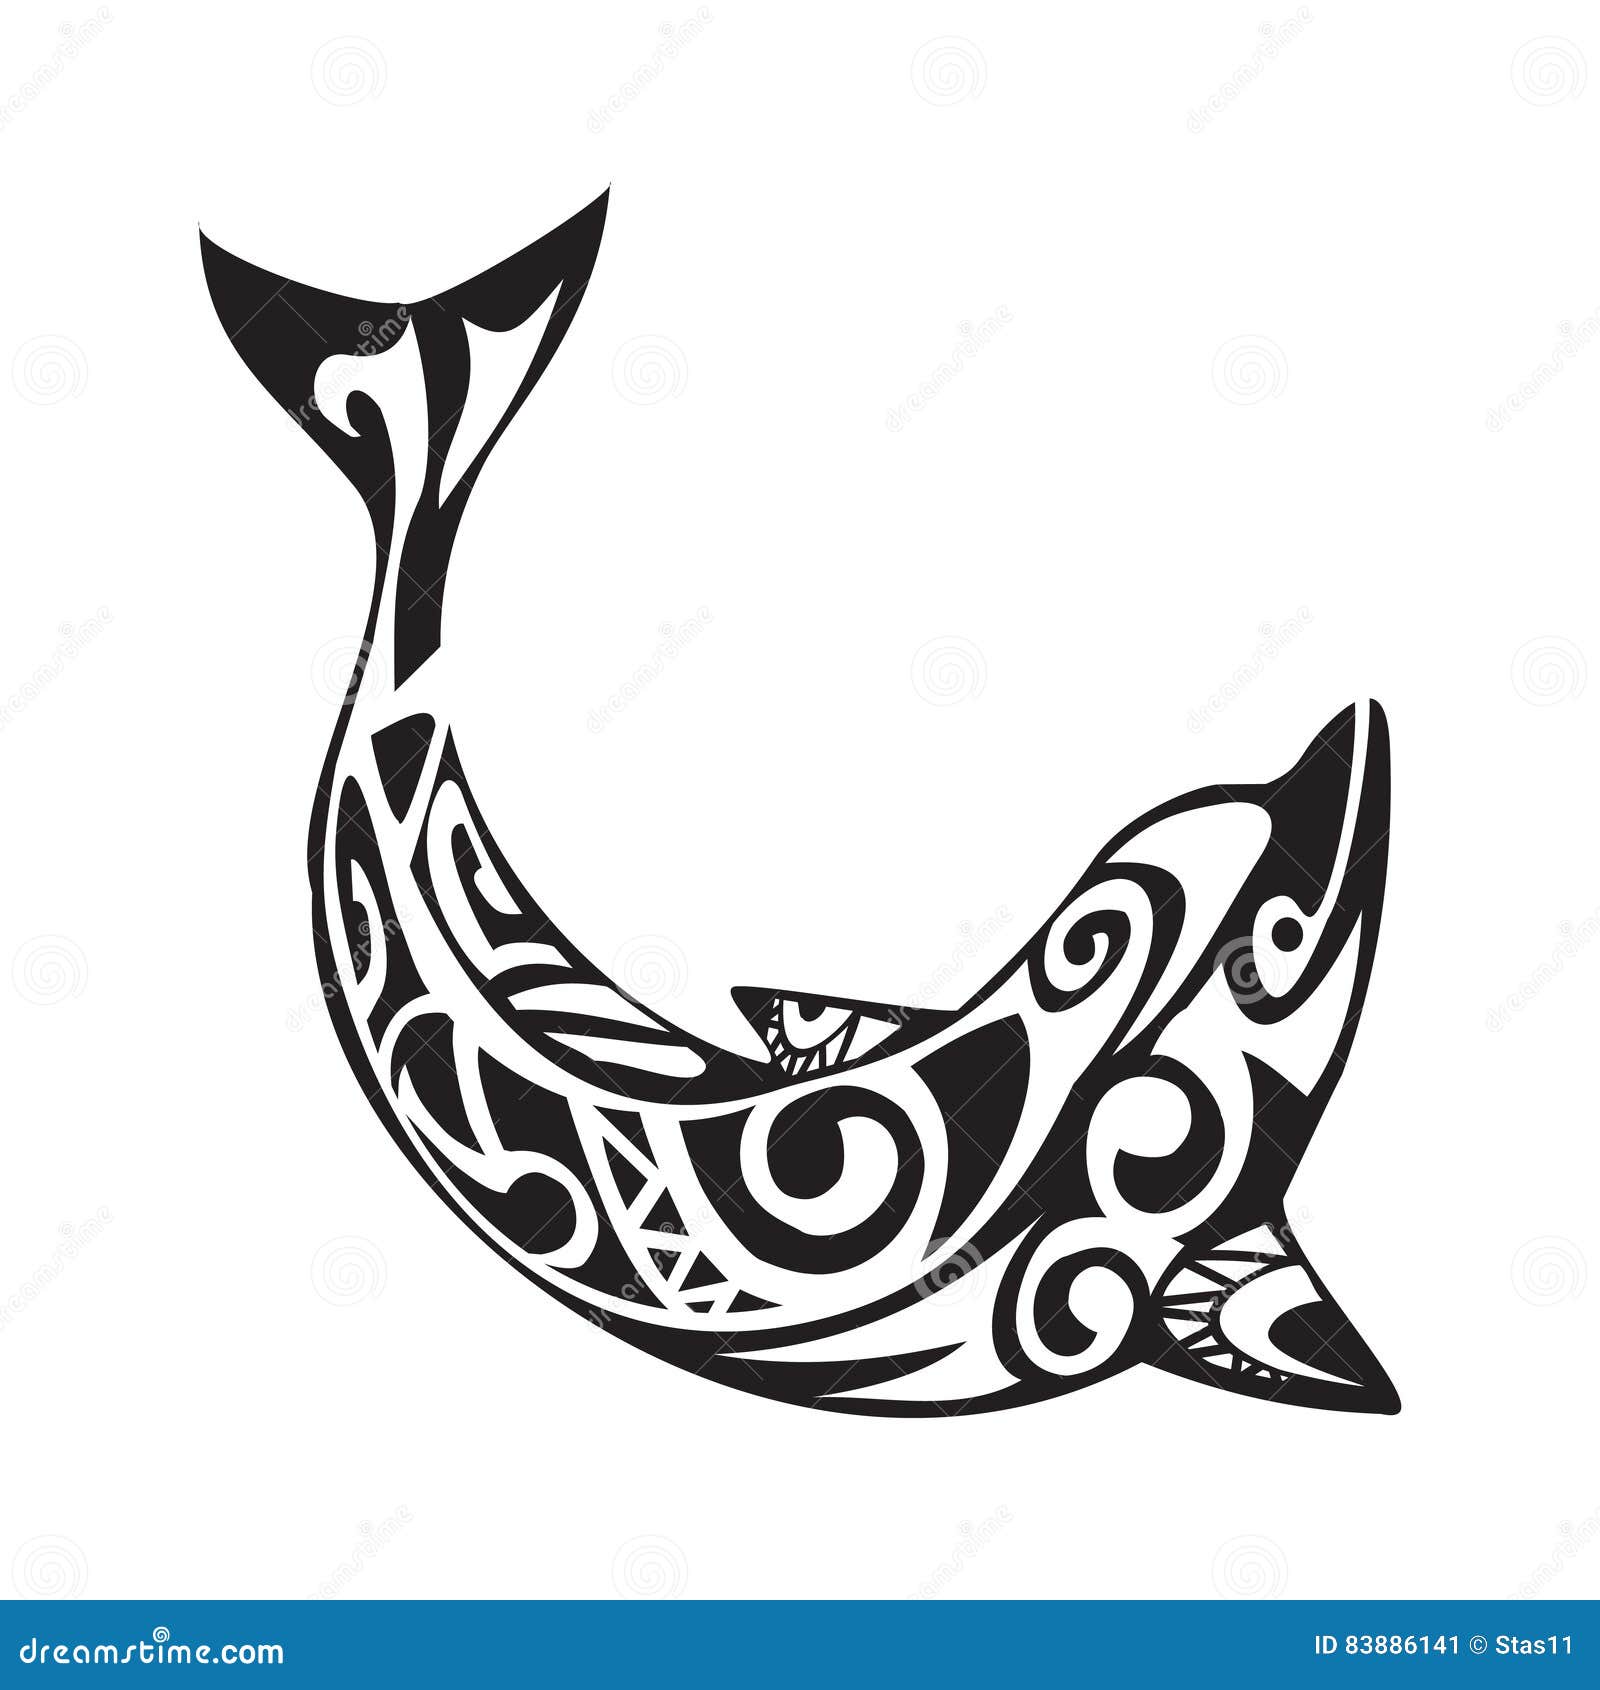 Blog not found | Celtic cross tattoos, Mermaid tattoos, Turtle tattoo  designs